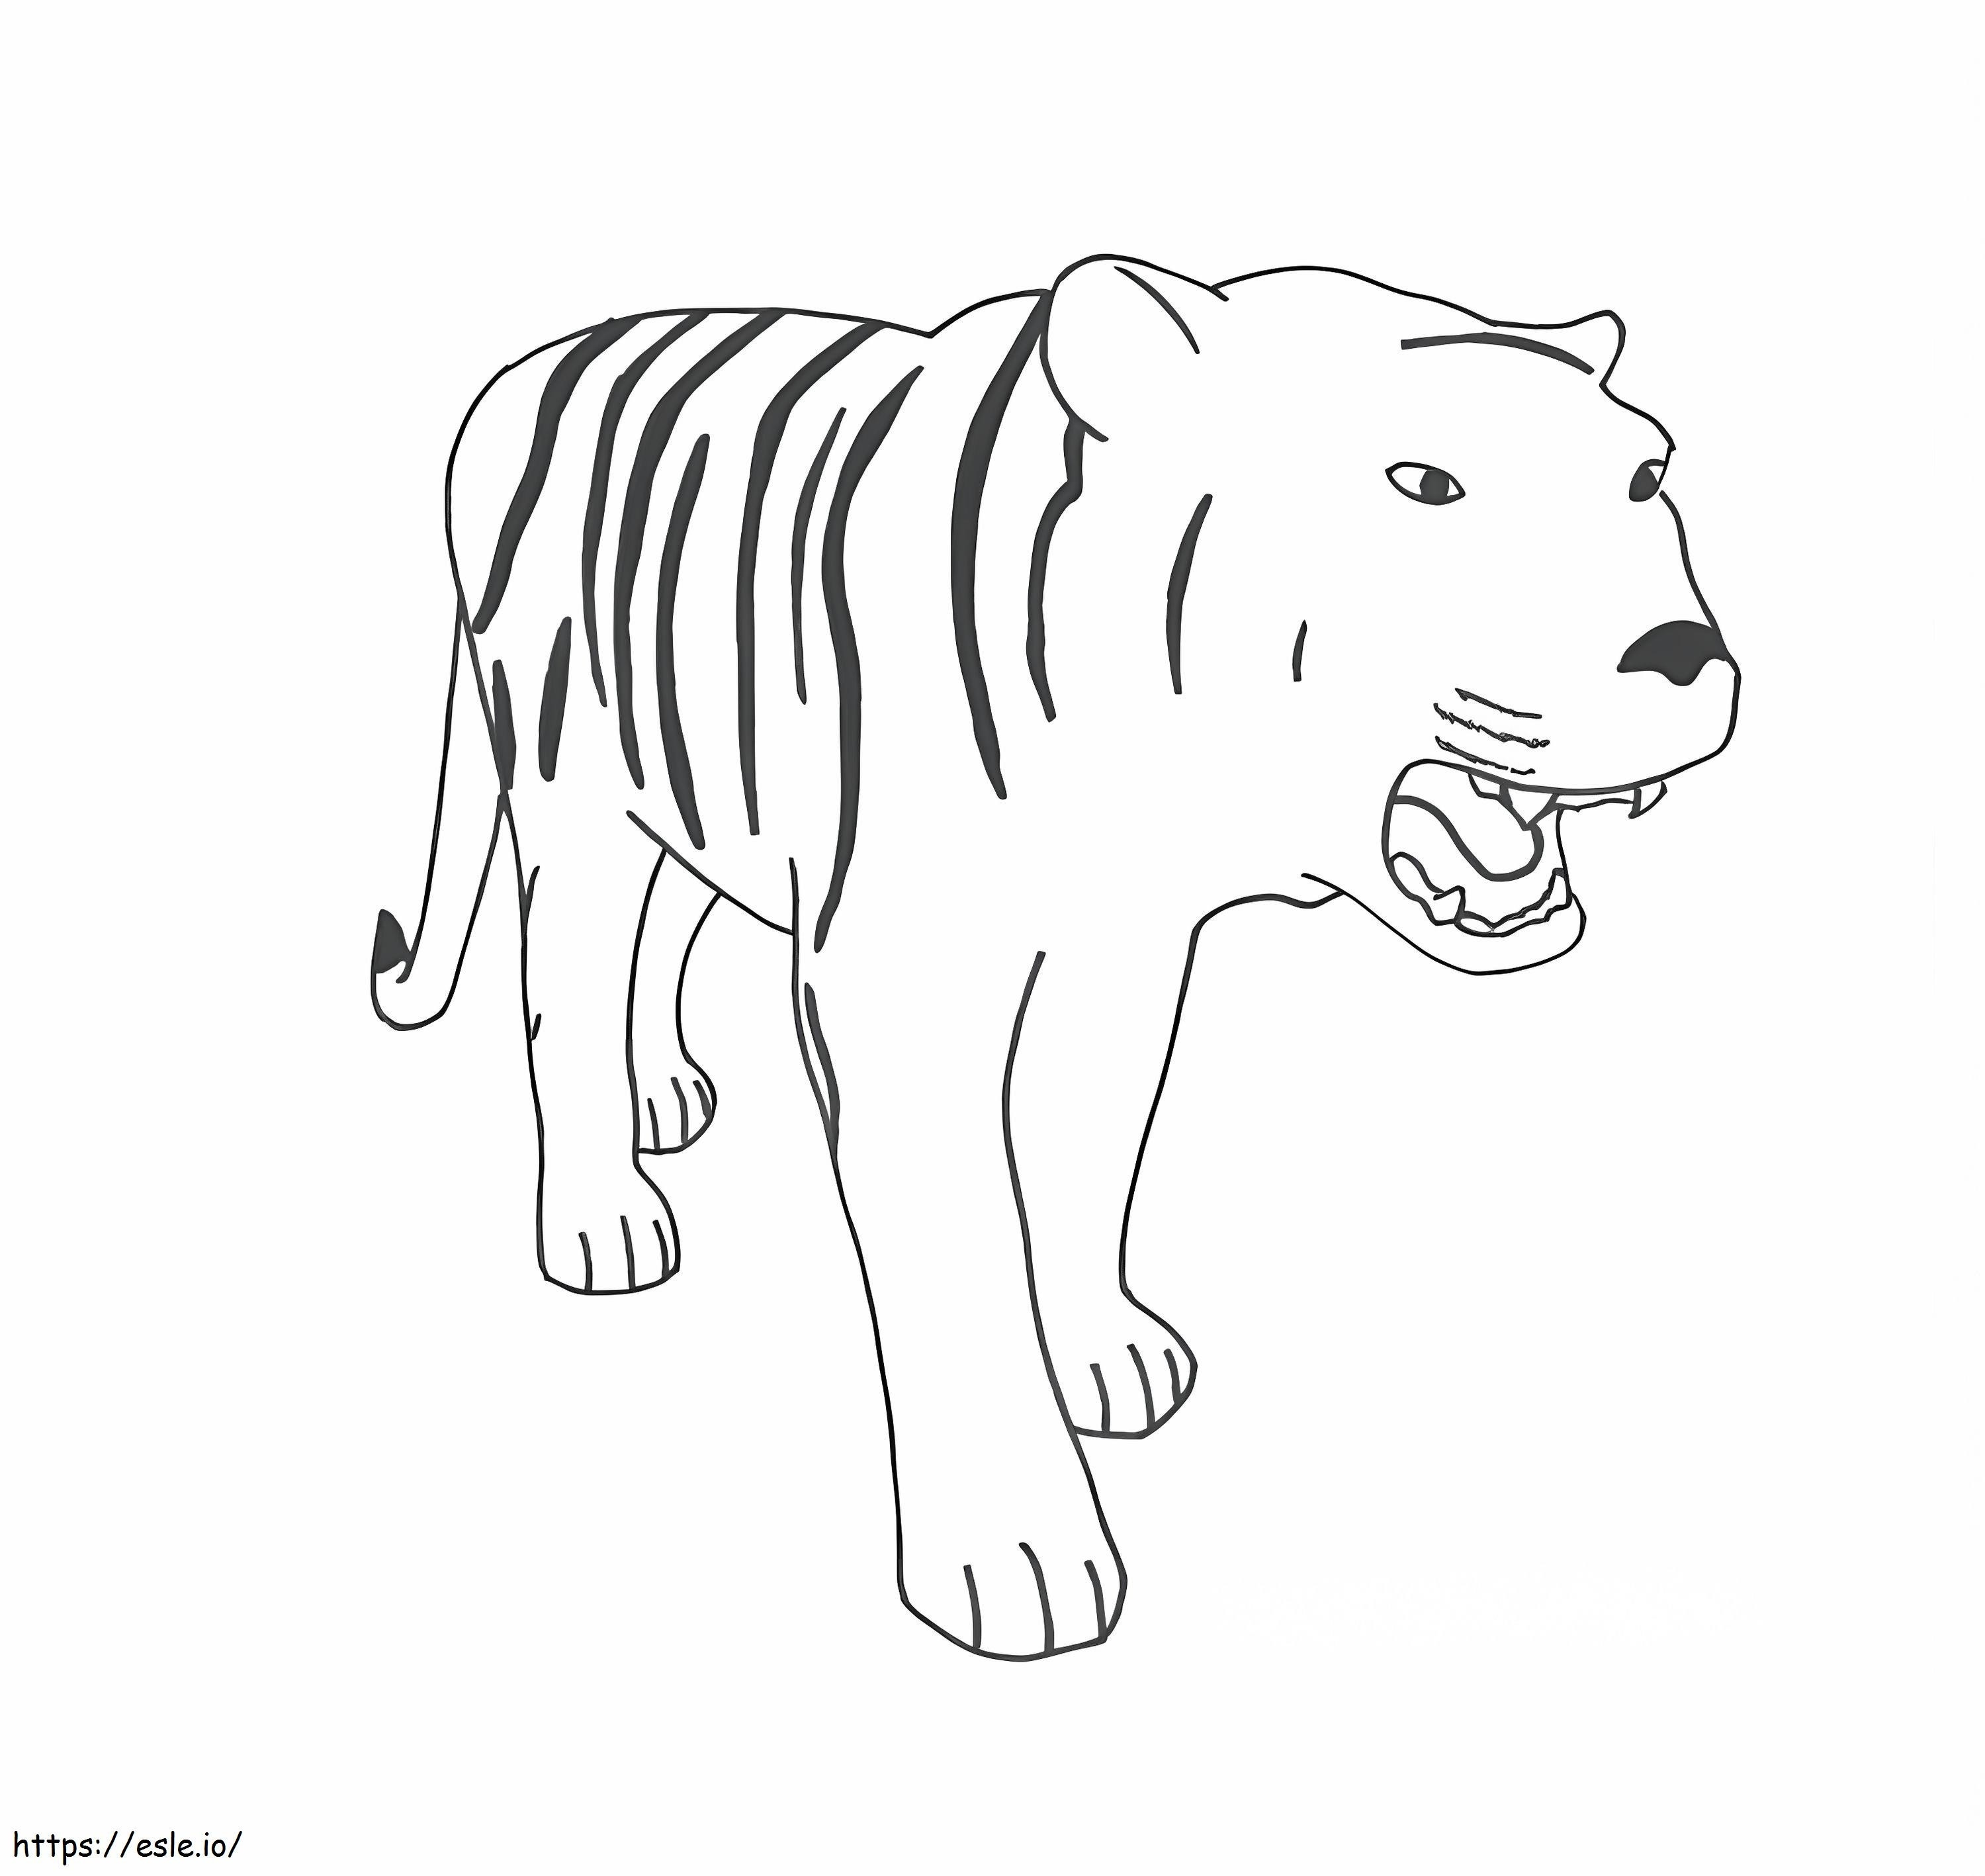 Easy Tiger coloring page